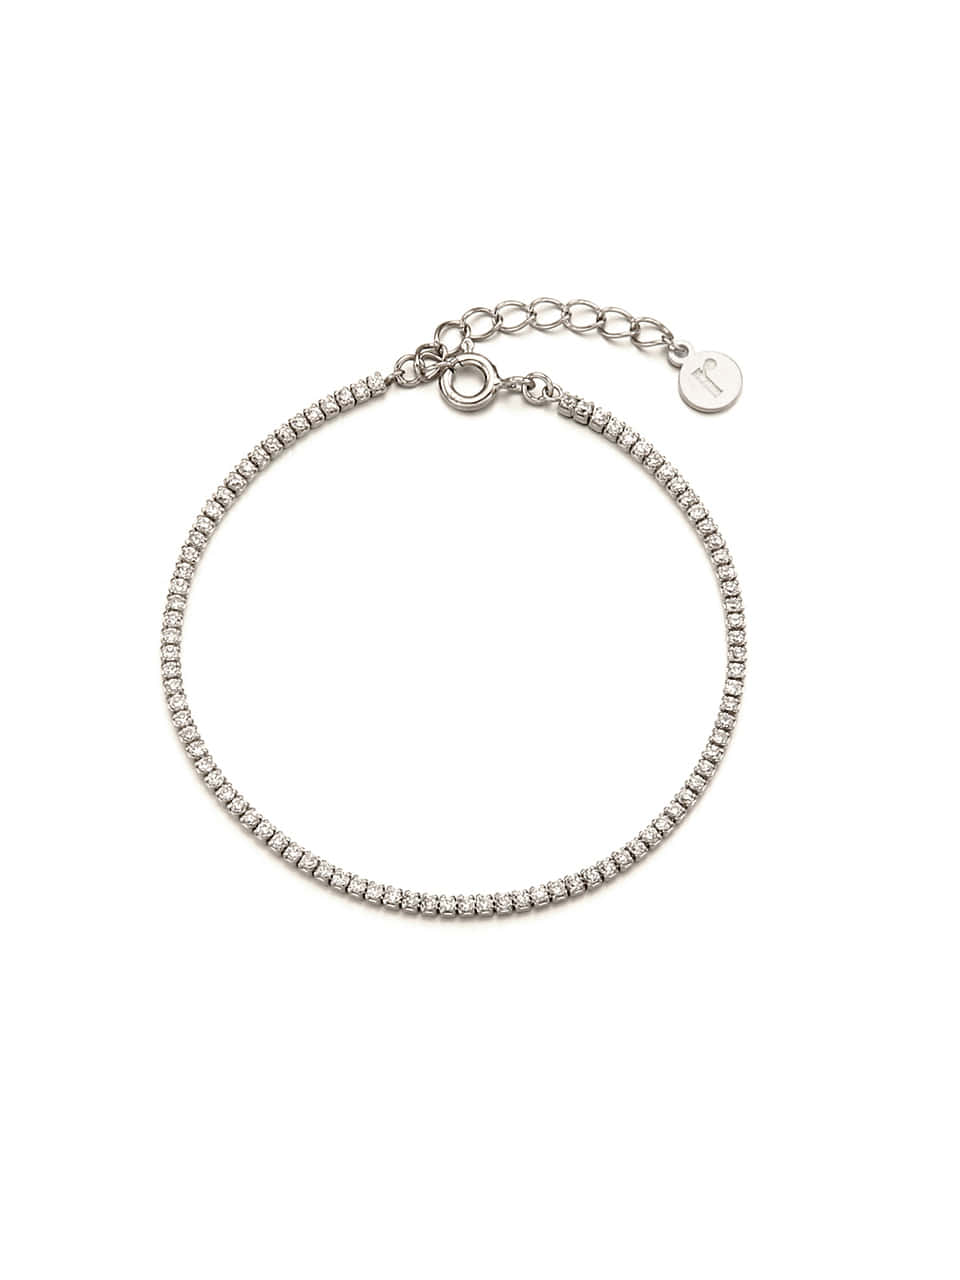 [silver925]slim tennis bracelet